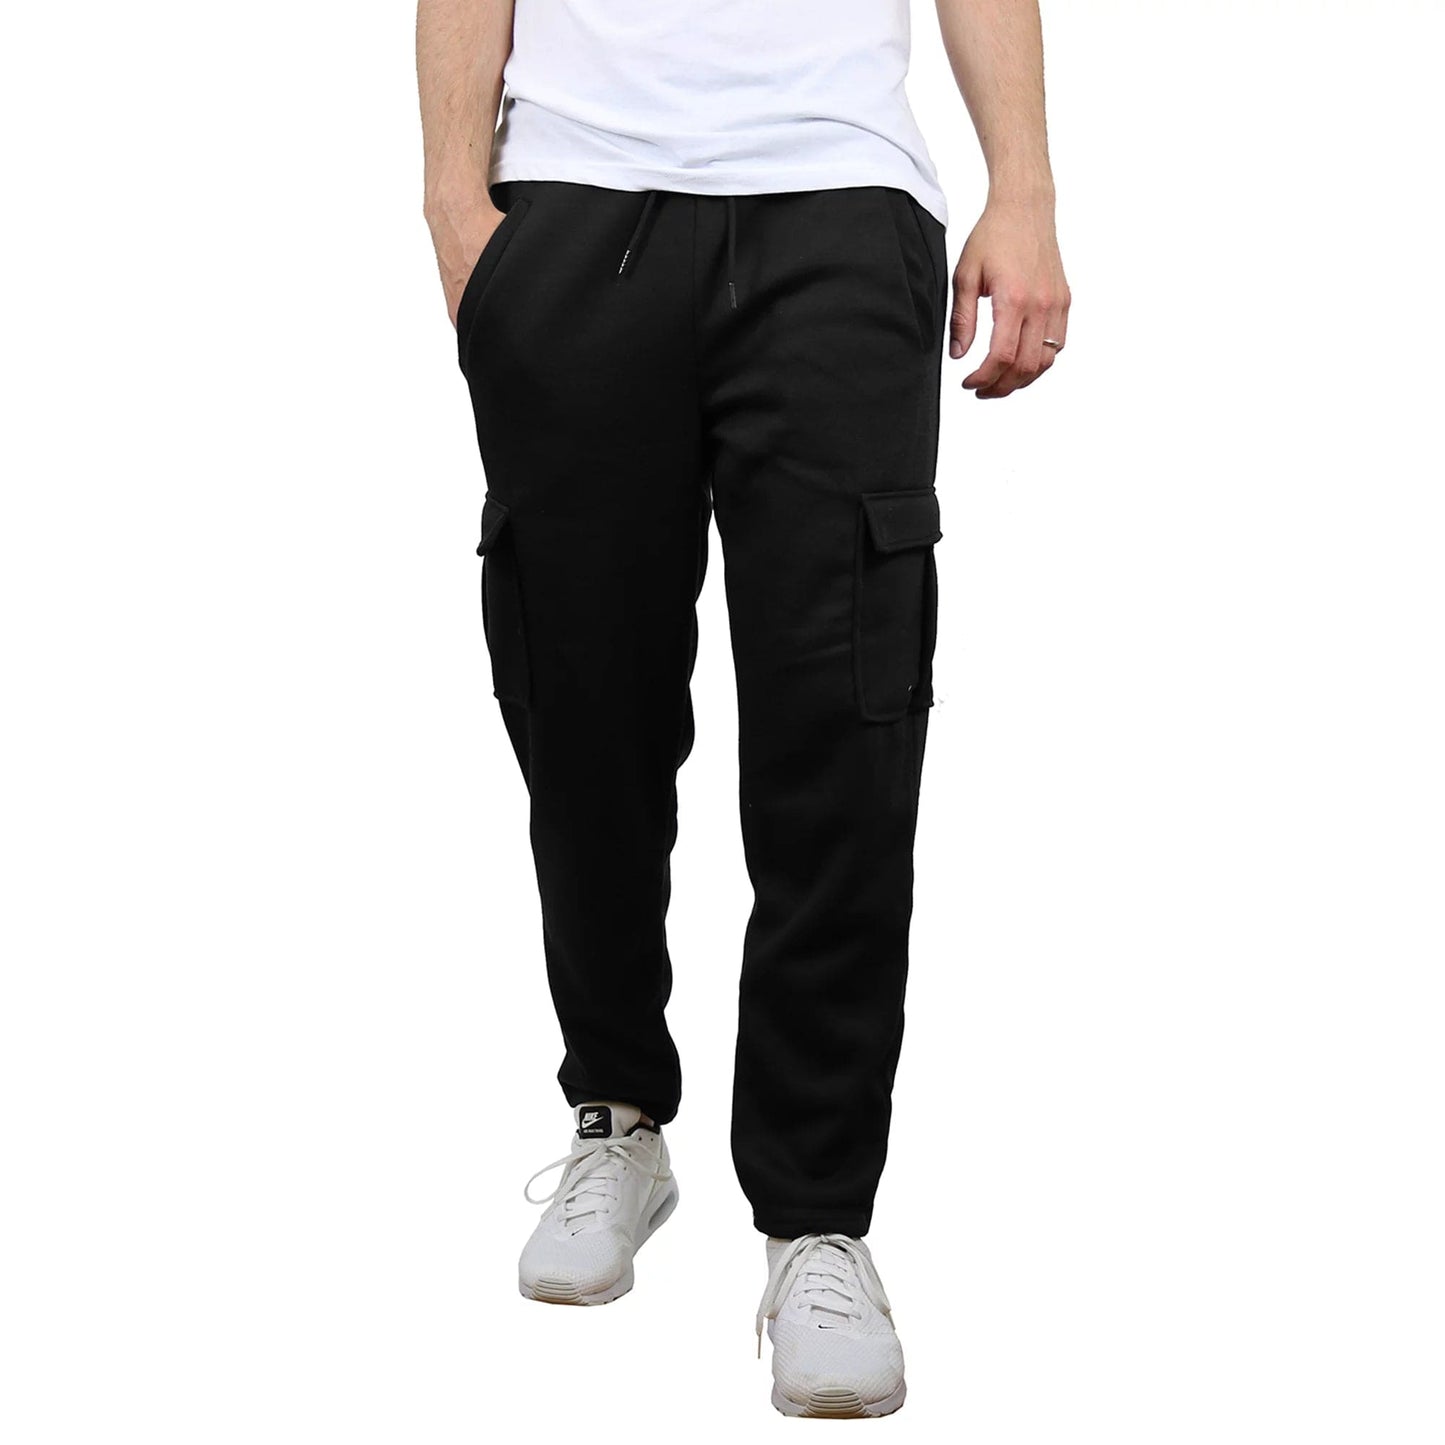 Men's Fleece Cargo Sweatpants With Open Bottom (Sizes, S-2XL)